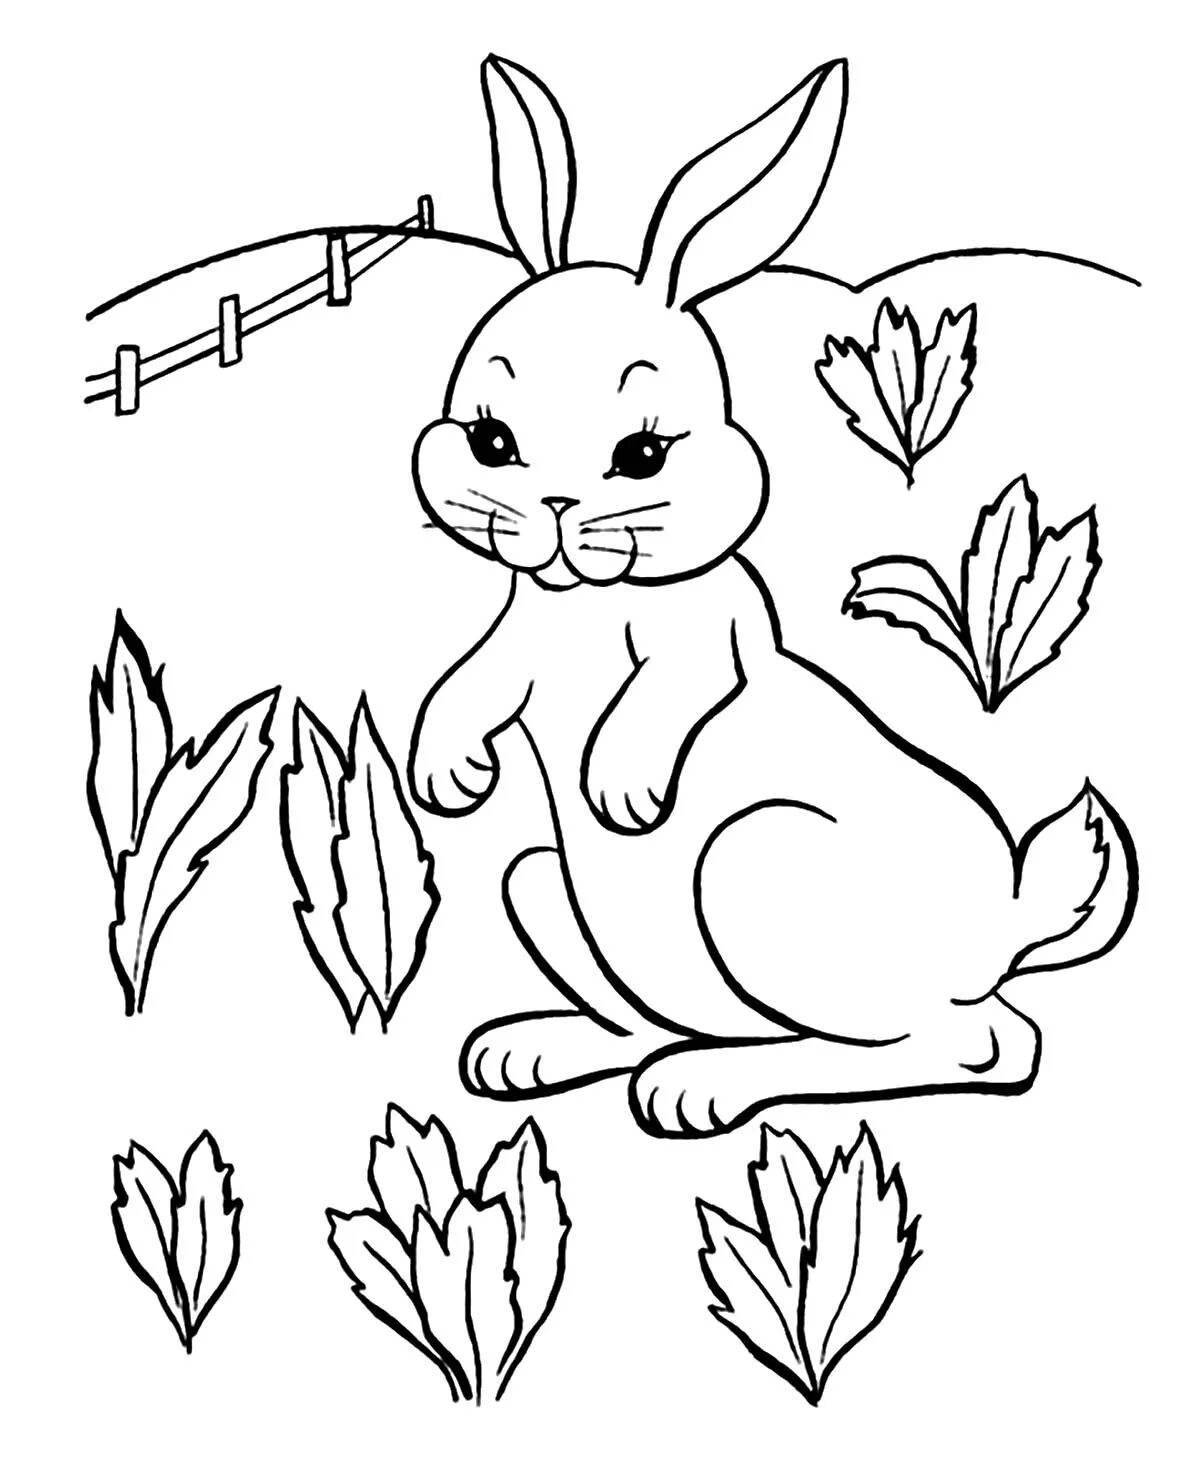 Fun coloring rabbit image